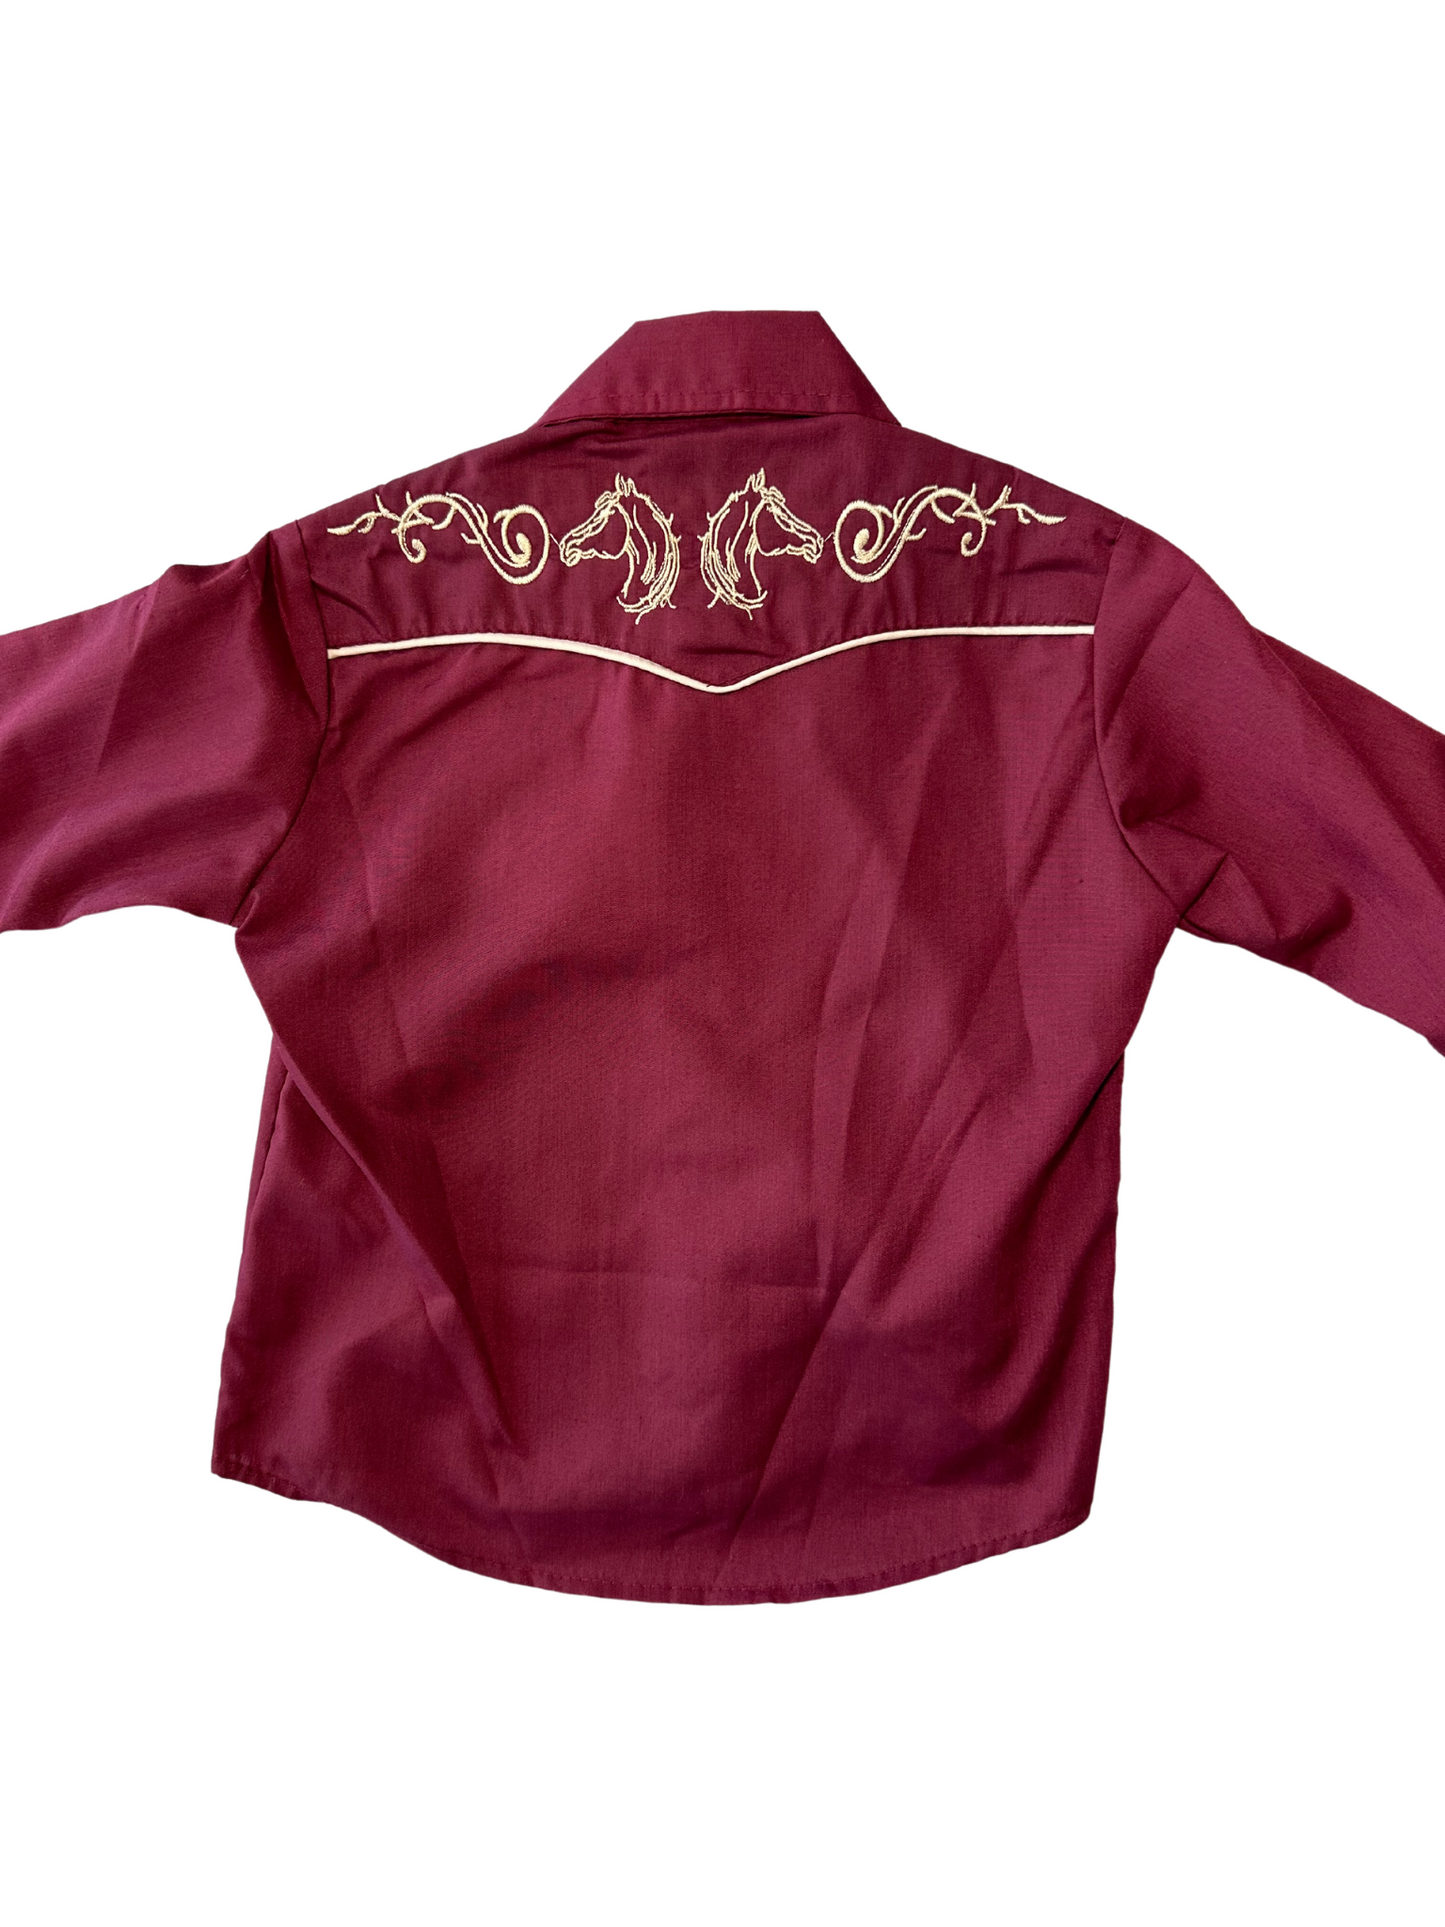 Boy's Horse Charro Shirt - Burgundy